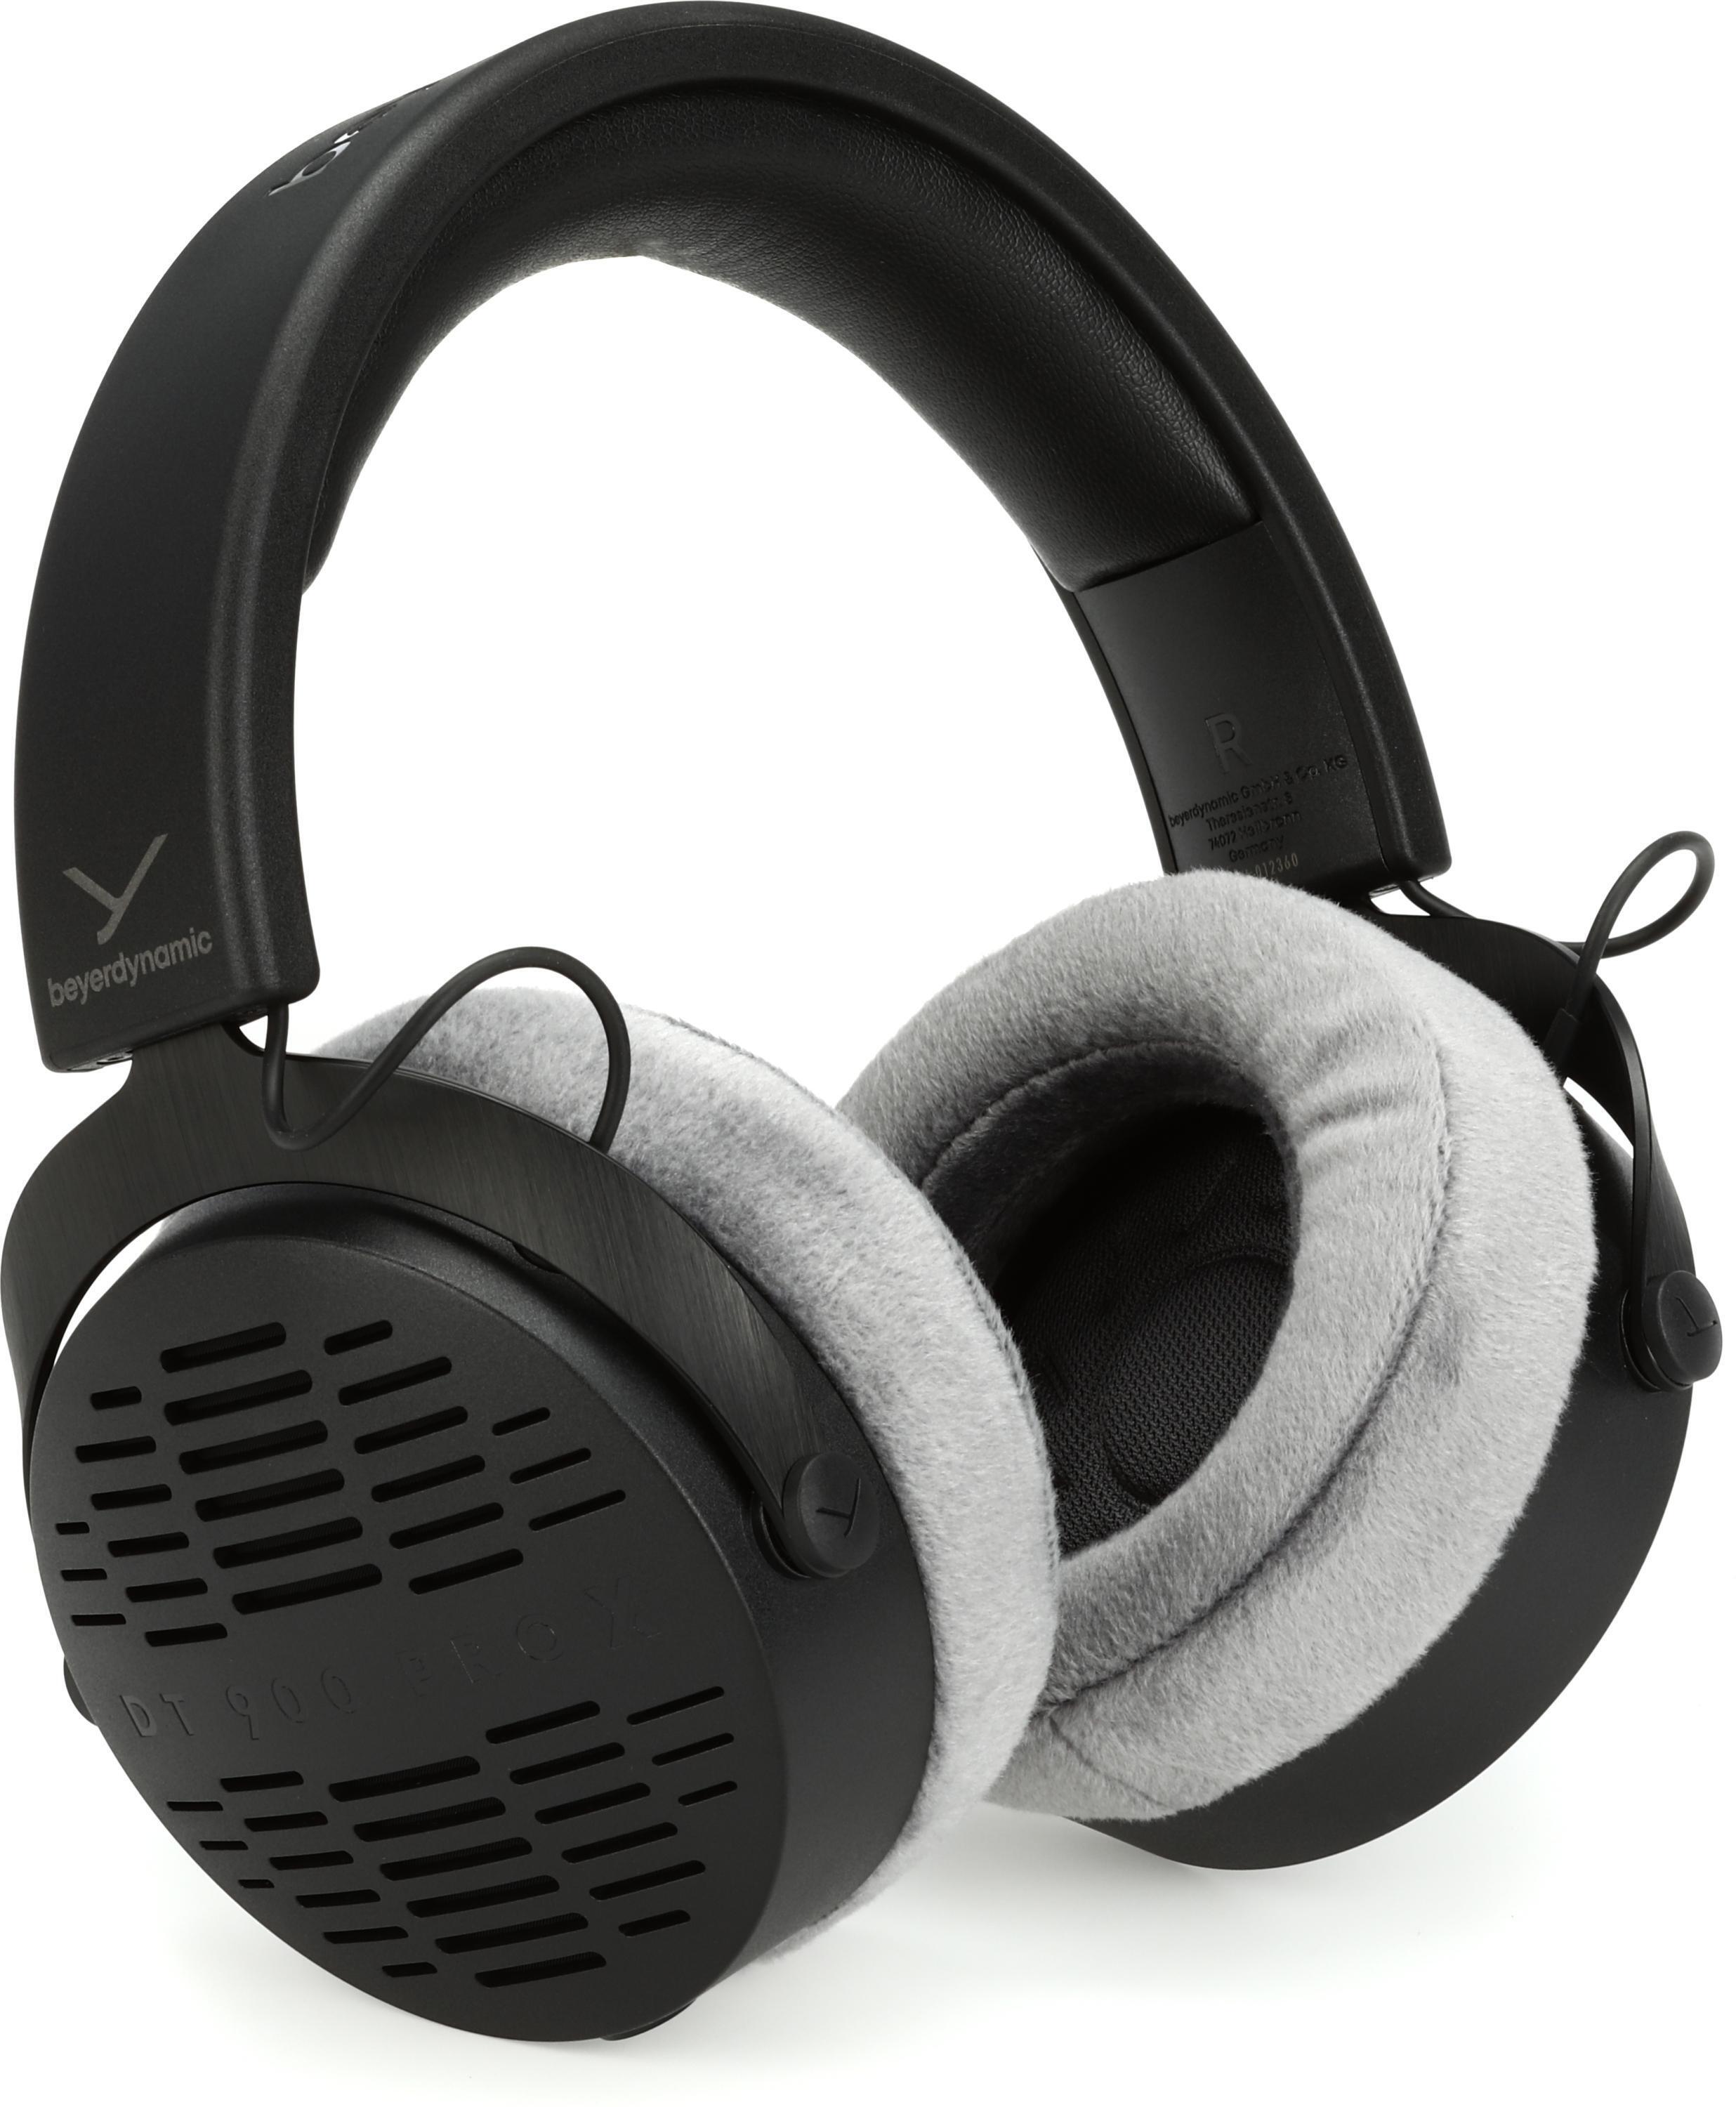 Bundled Item: Beyerdynamic DT 900 Pro X Open-back Studio Mixing Headphones